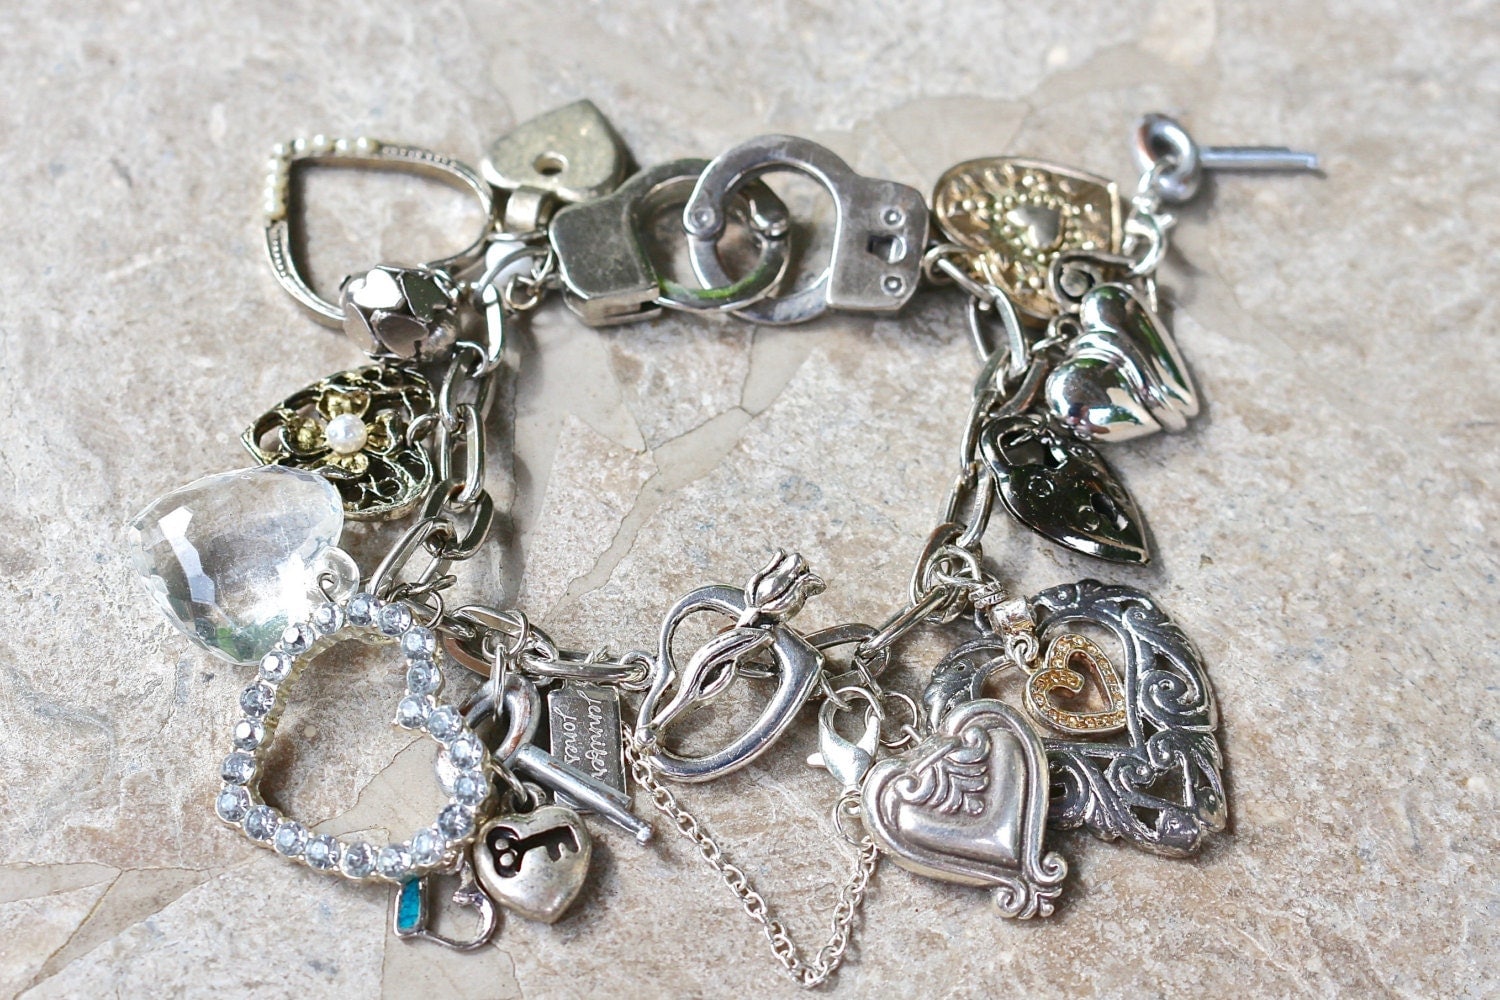 Vintage Charm Bracelet upcycled charms toy by JenniferJonesJewelry